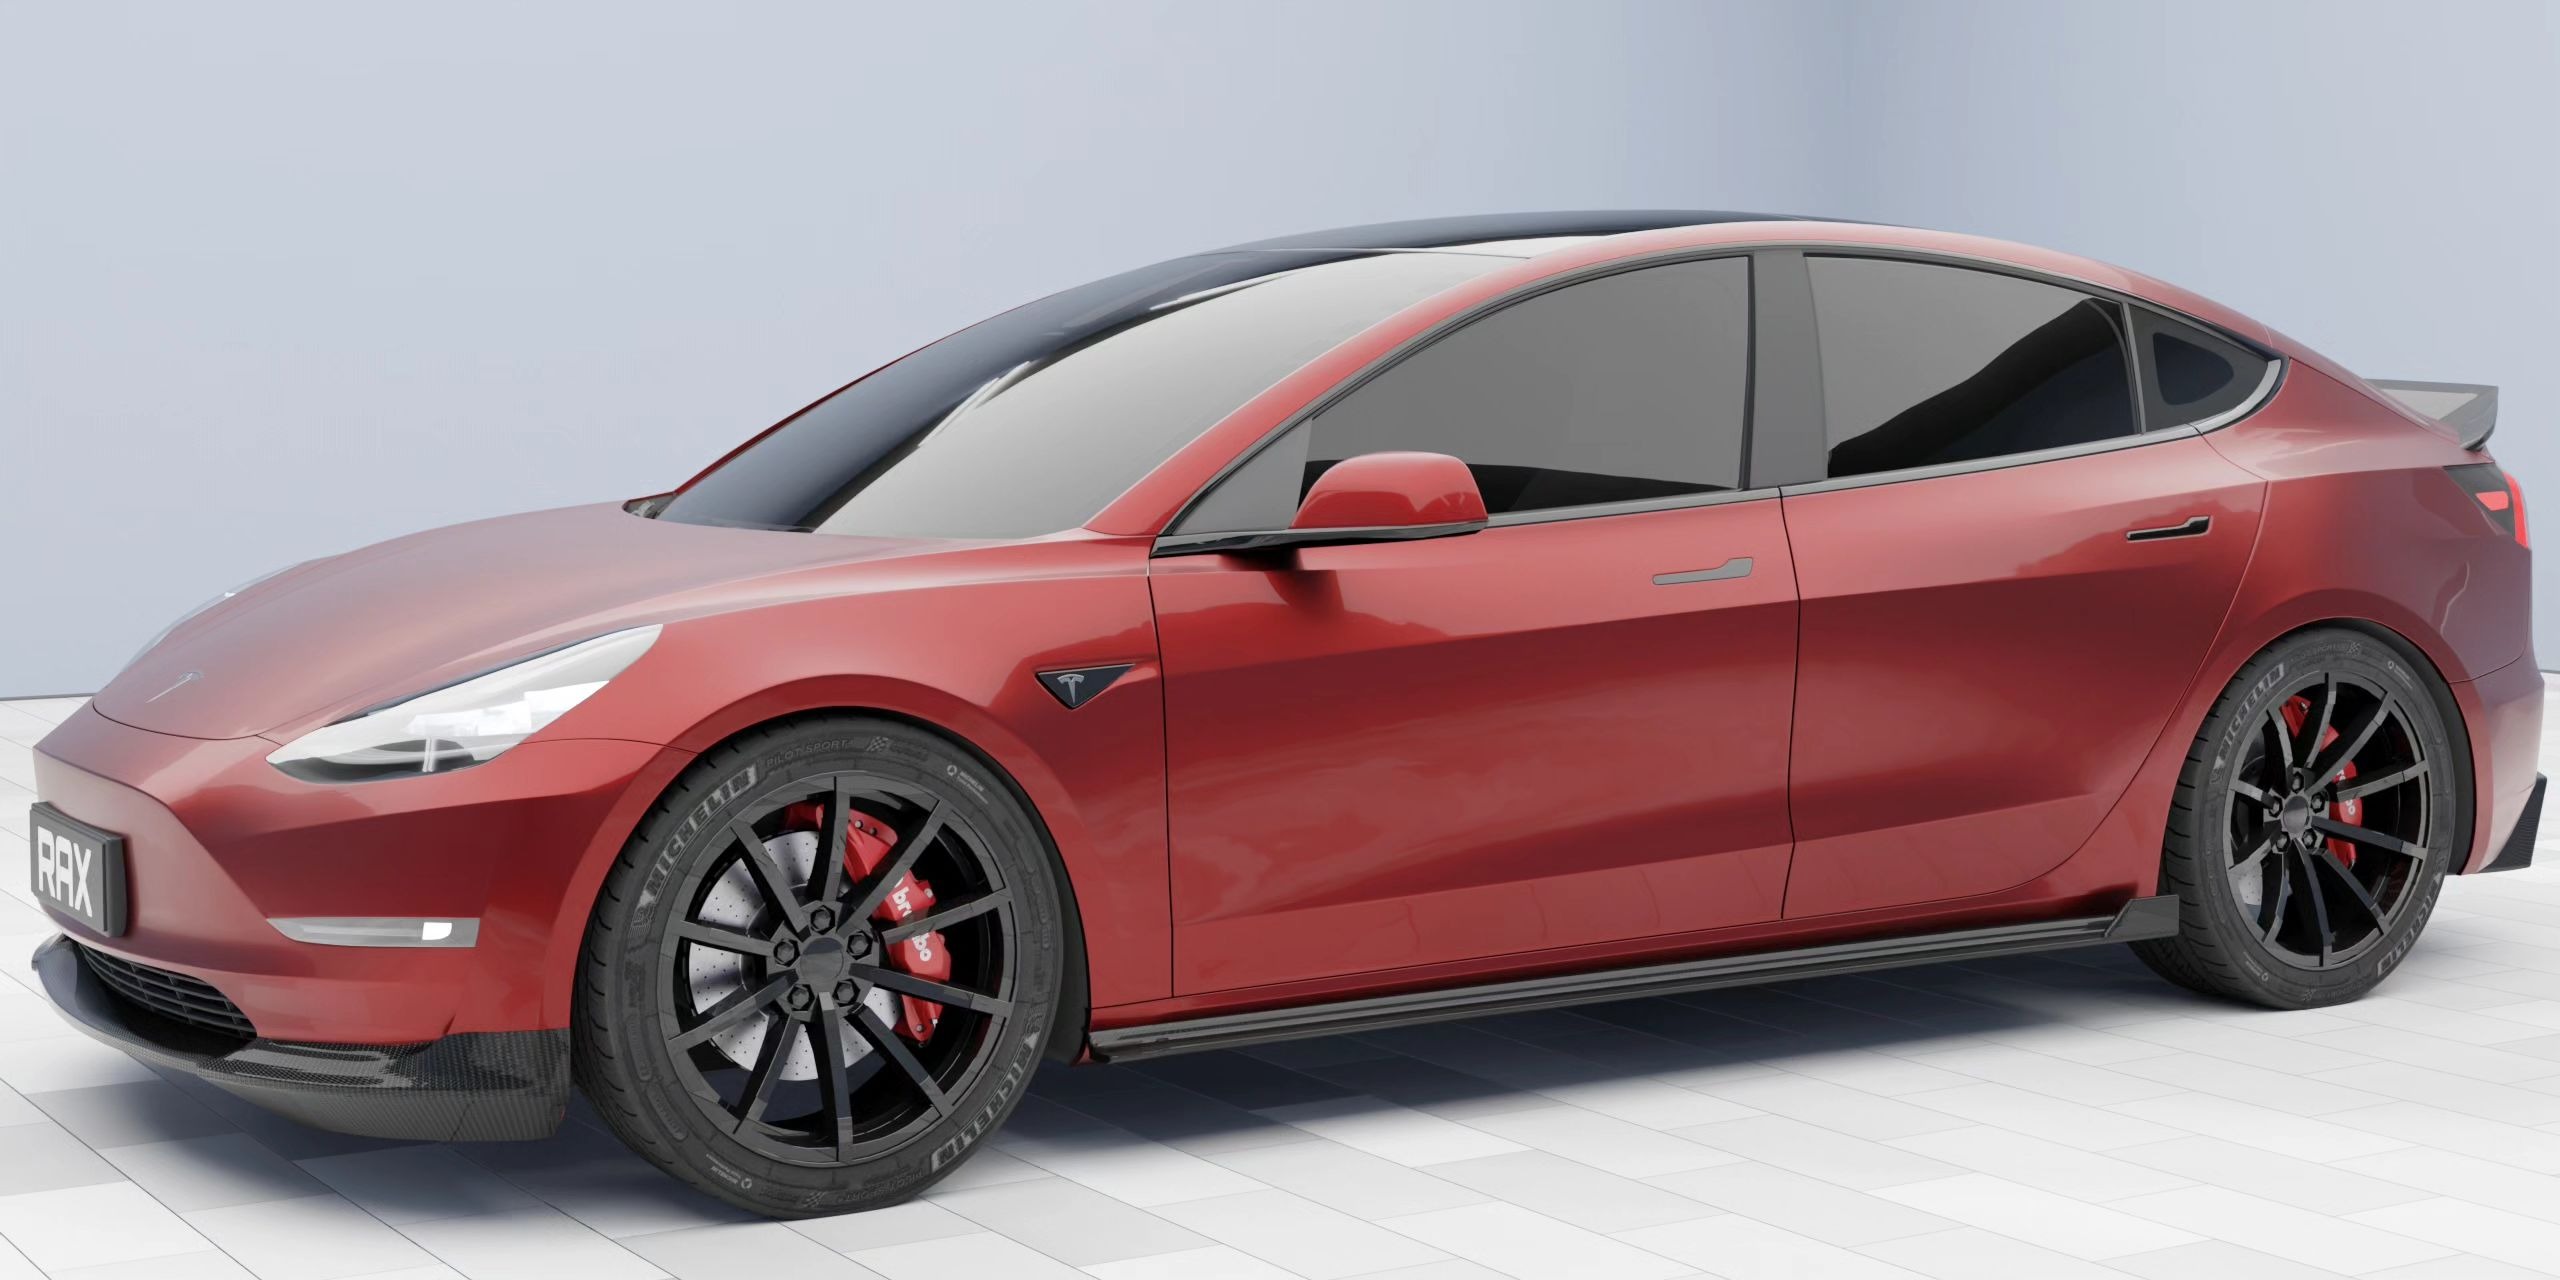 New Tesla Model 3 2024-ON CMST Tuning Carbon Fiber Full Body Kit Ver.1 –  Performance SpeedShop